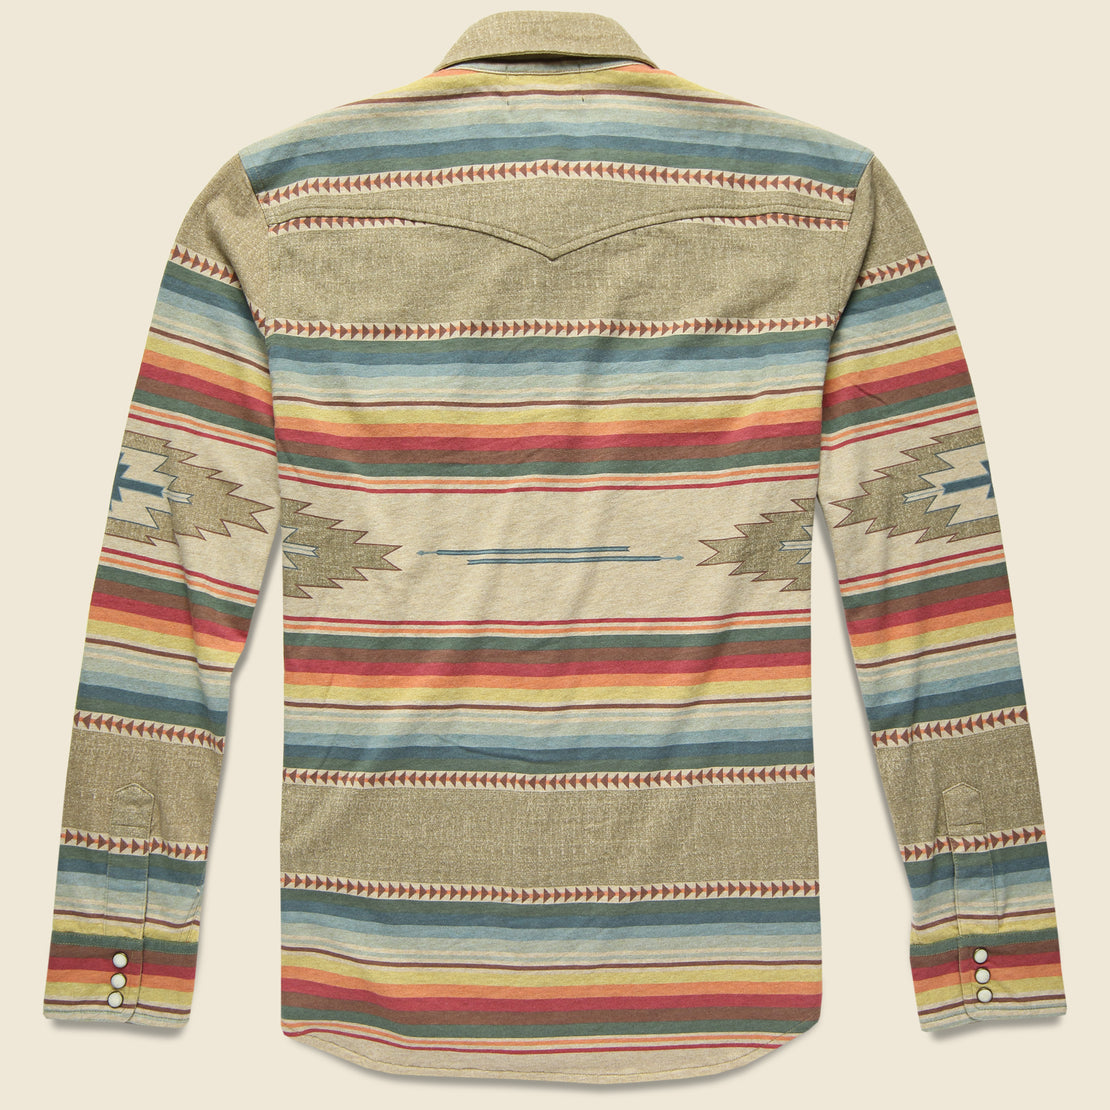 Jacquard Knit Western Shirt - Brown Multi